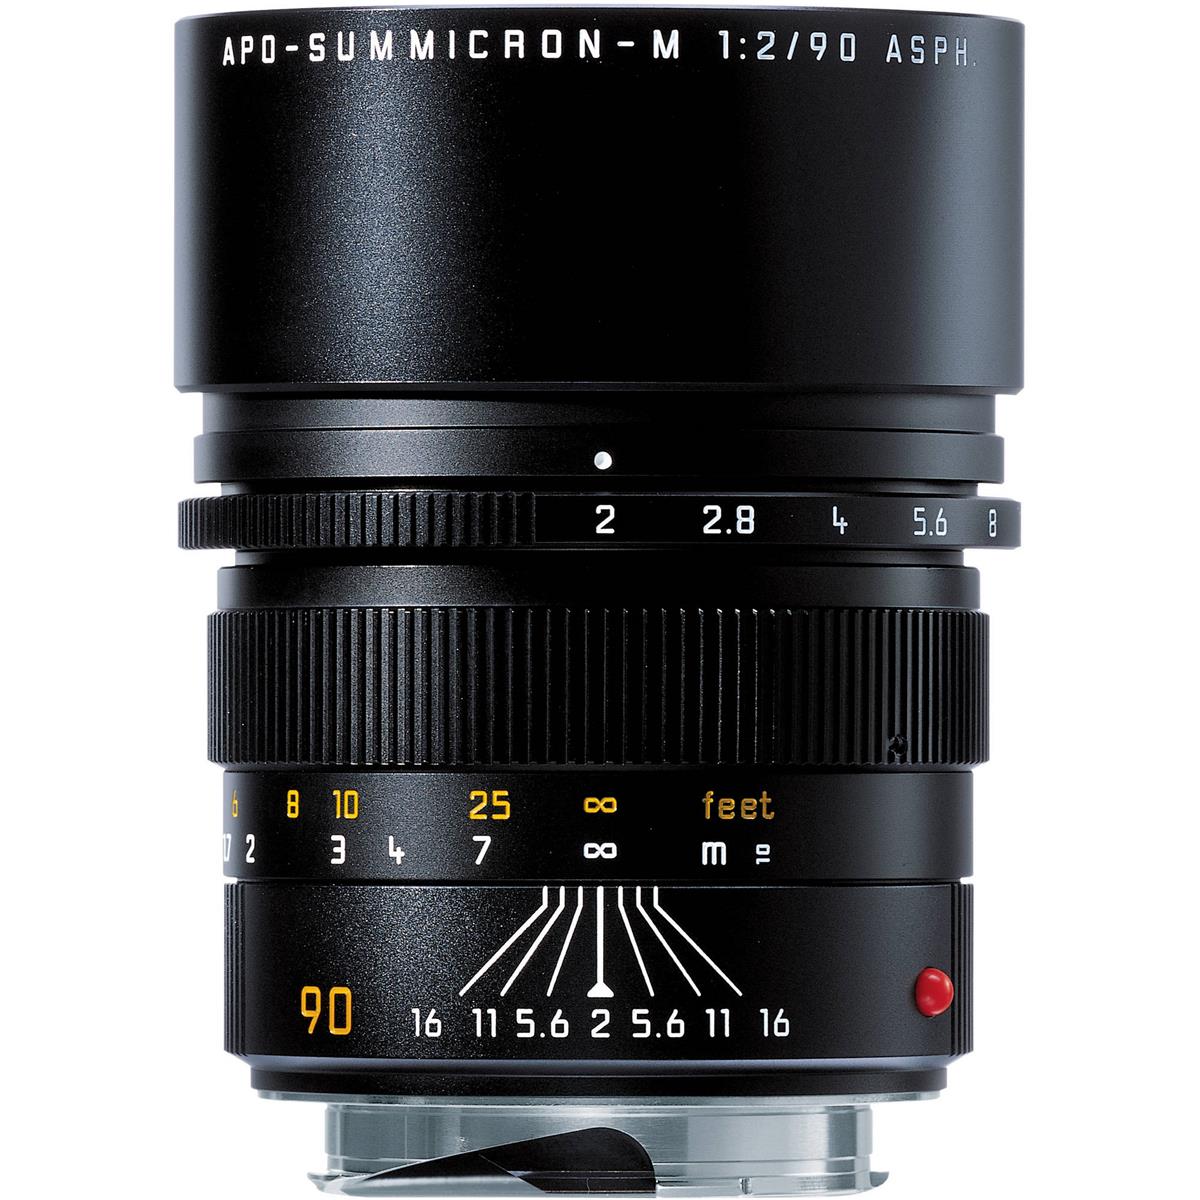 

Leica 90mm f/2.0 APO-Summicron-M Aspherical Lens for M System, Black